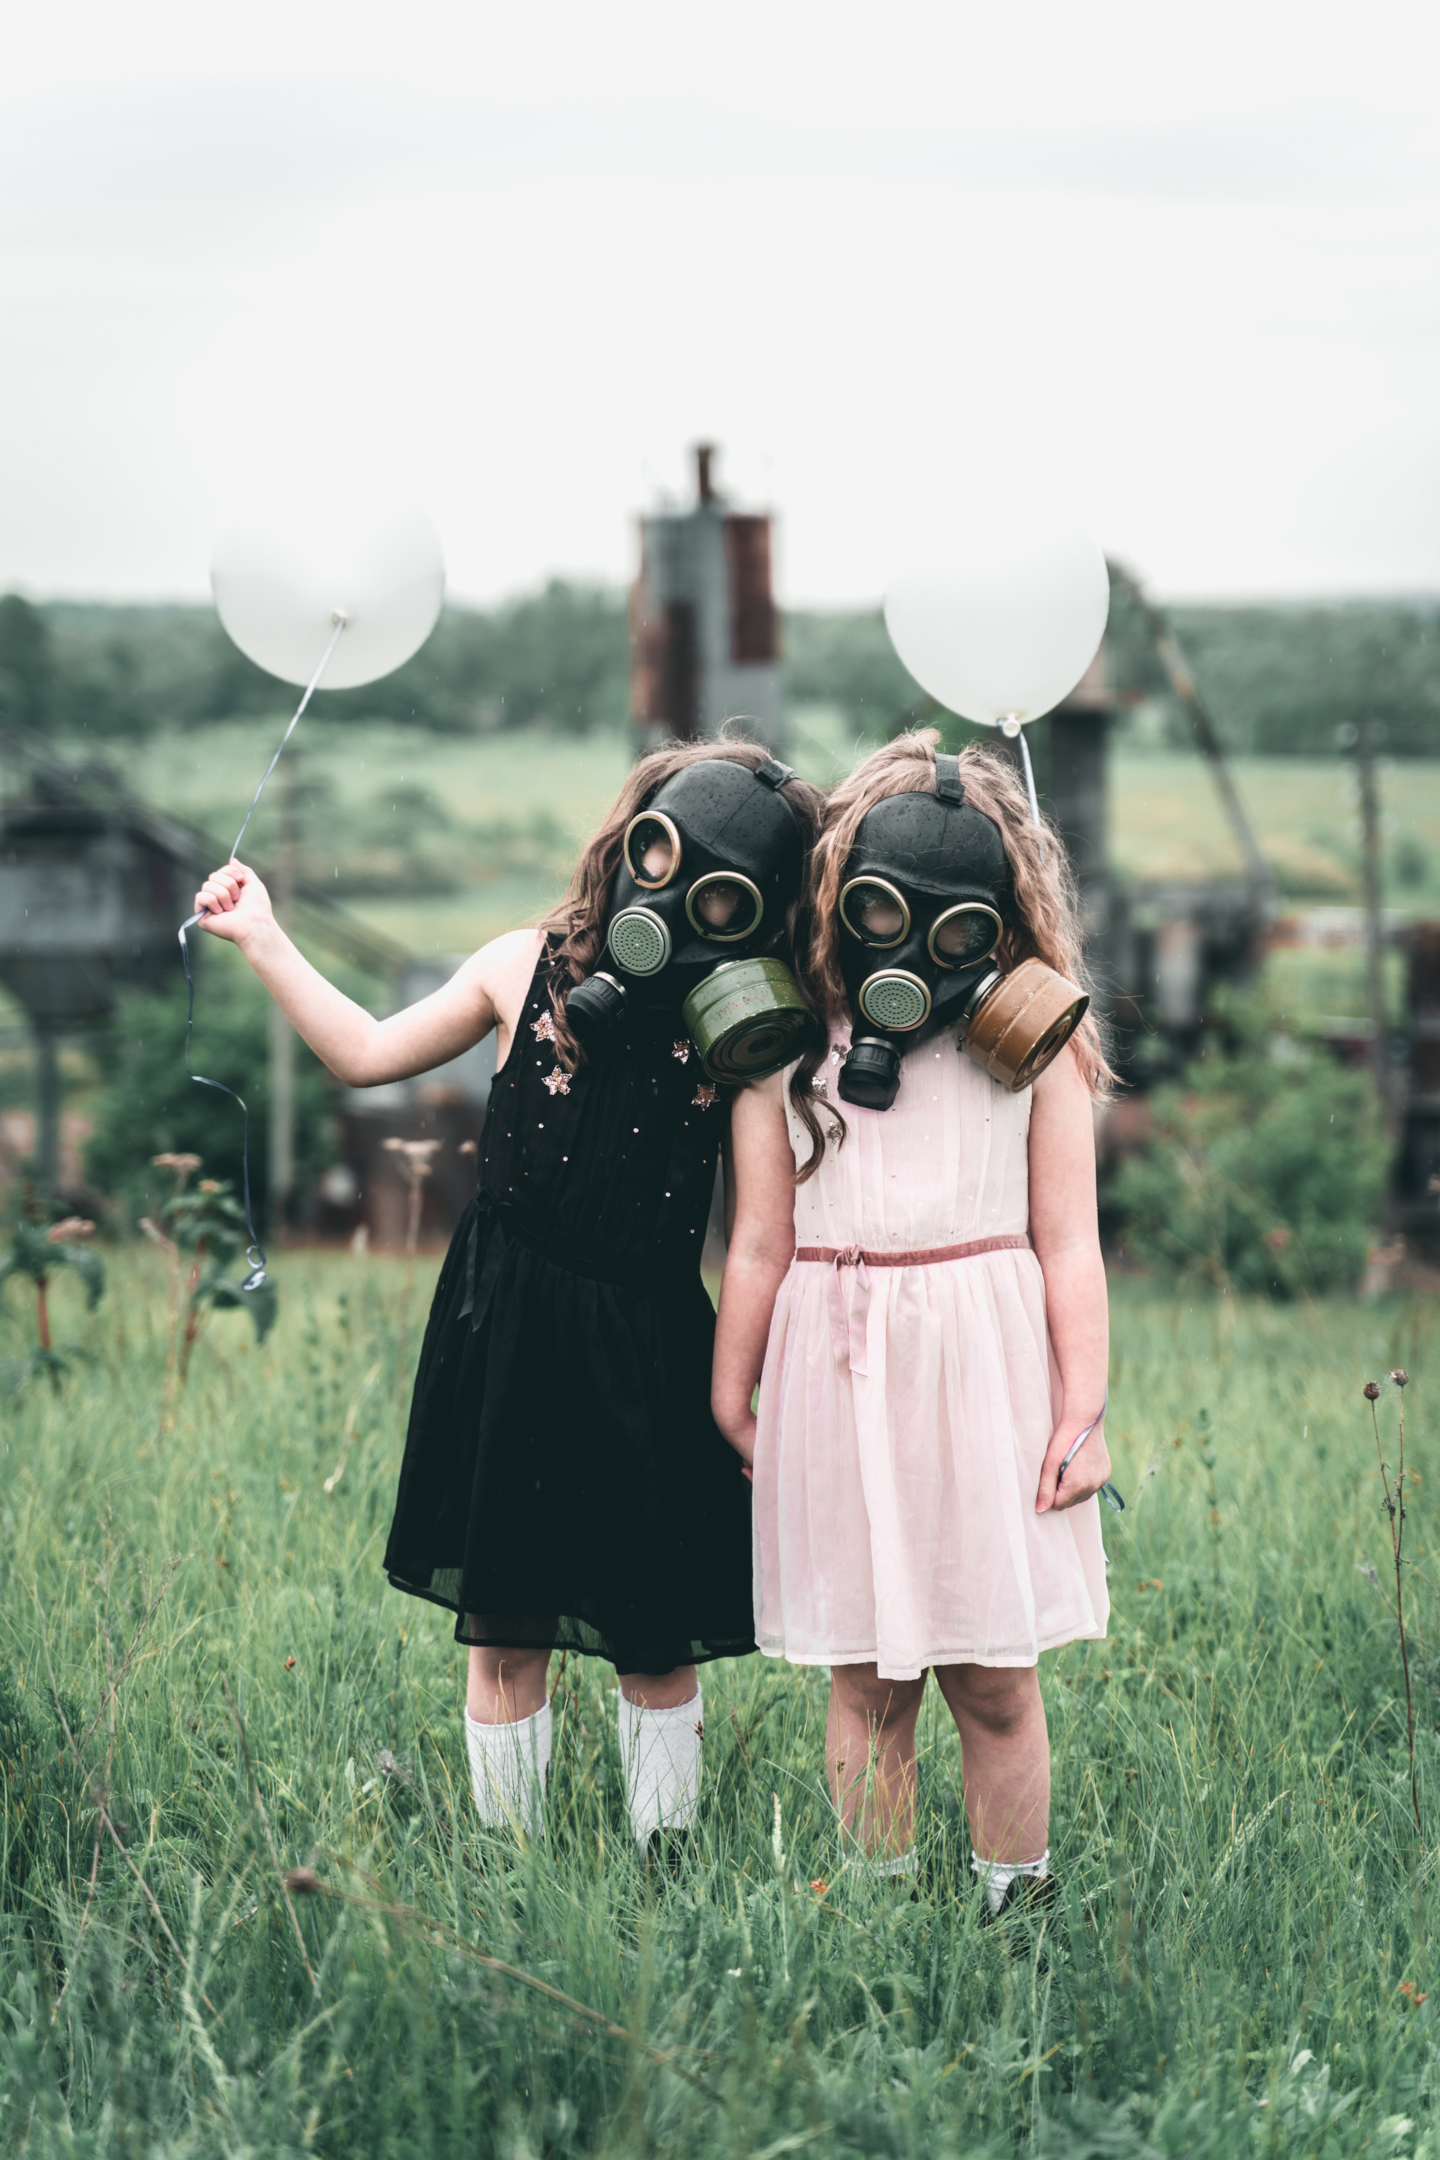 two girls wearing gas masks, holding balloons